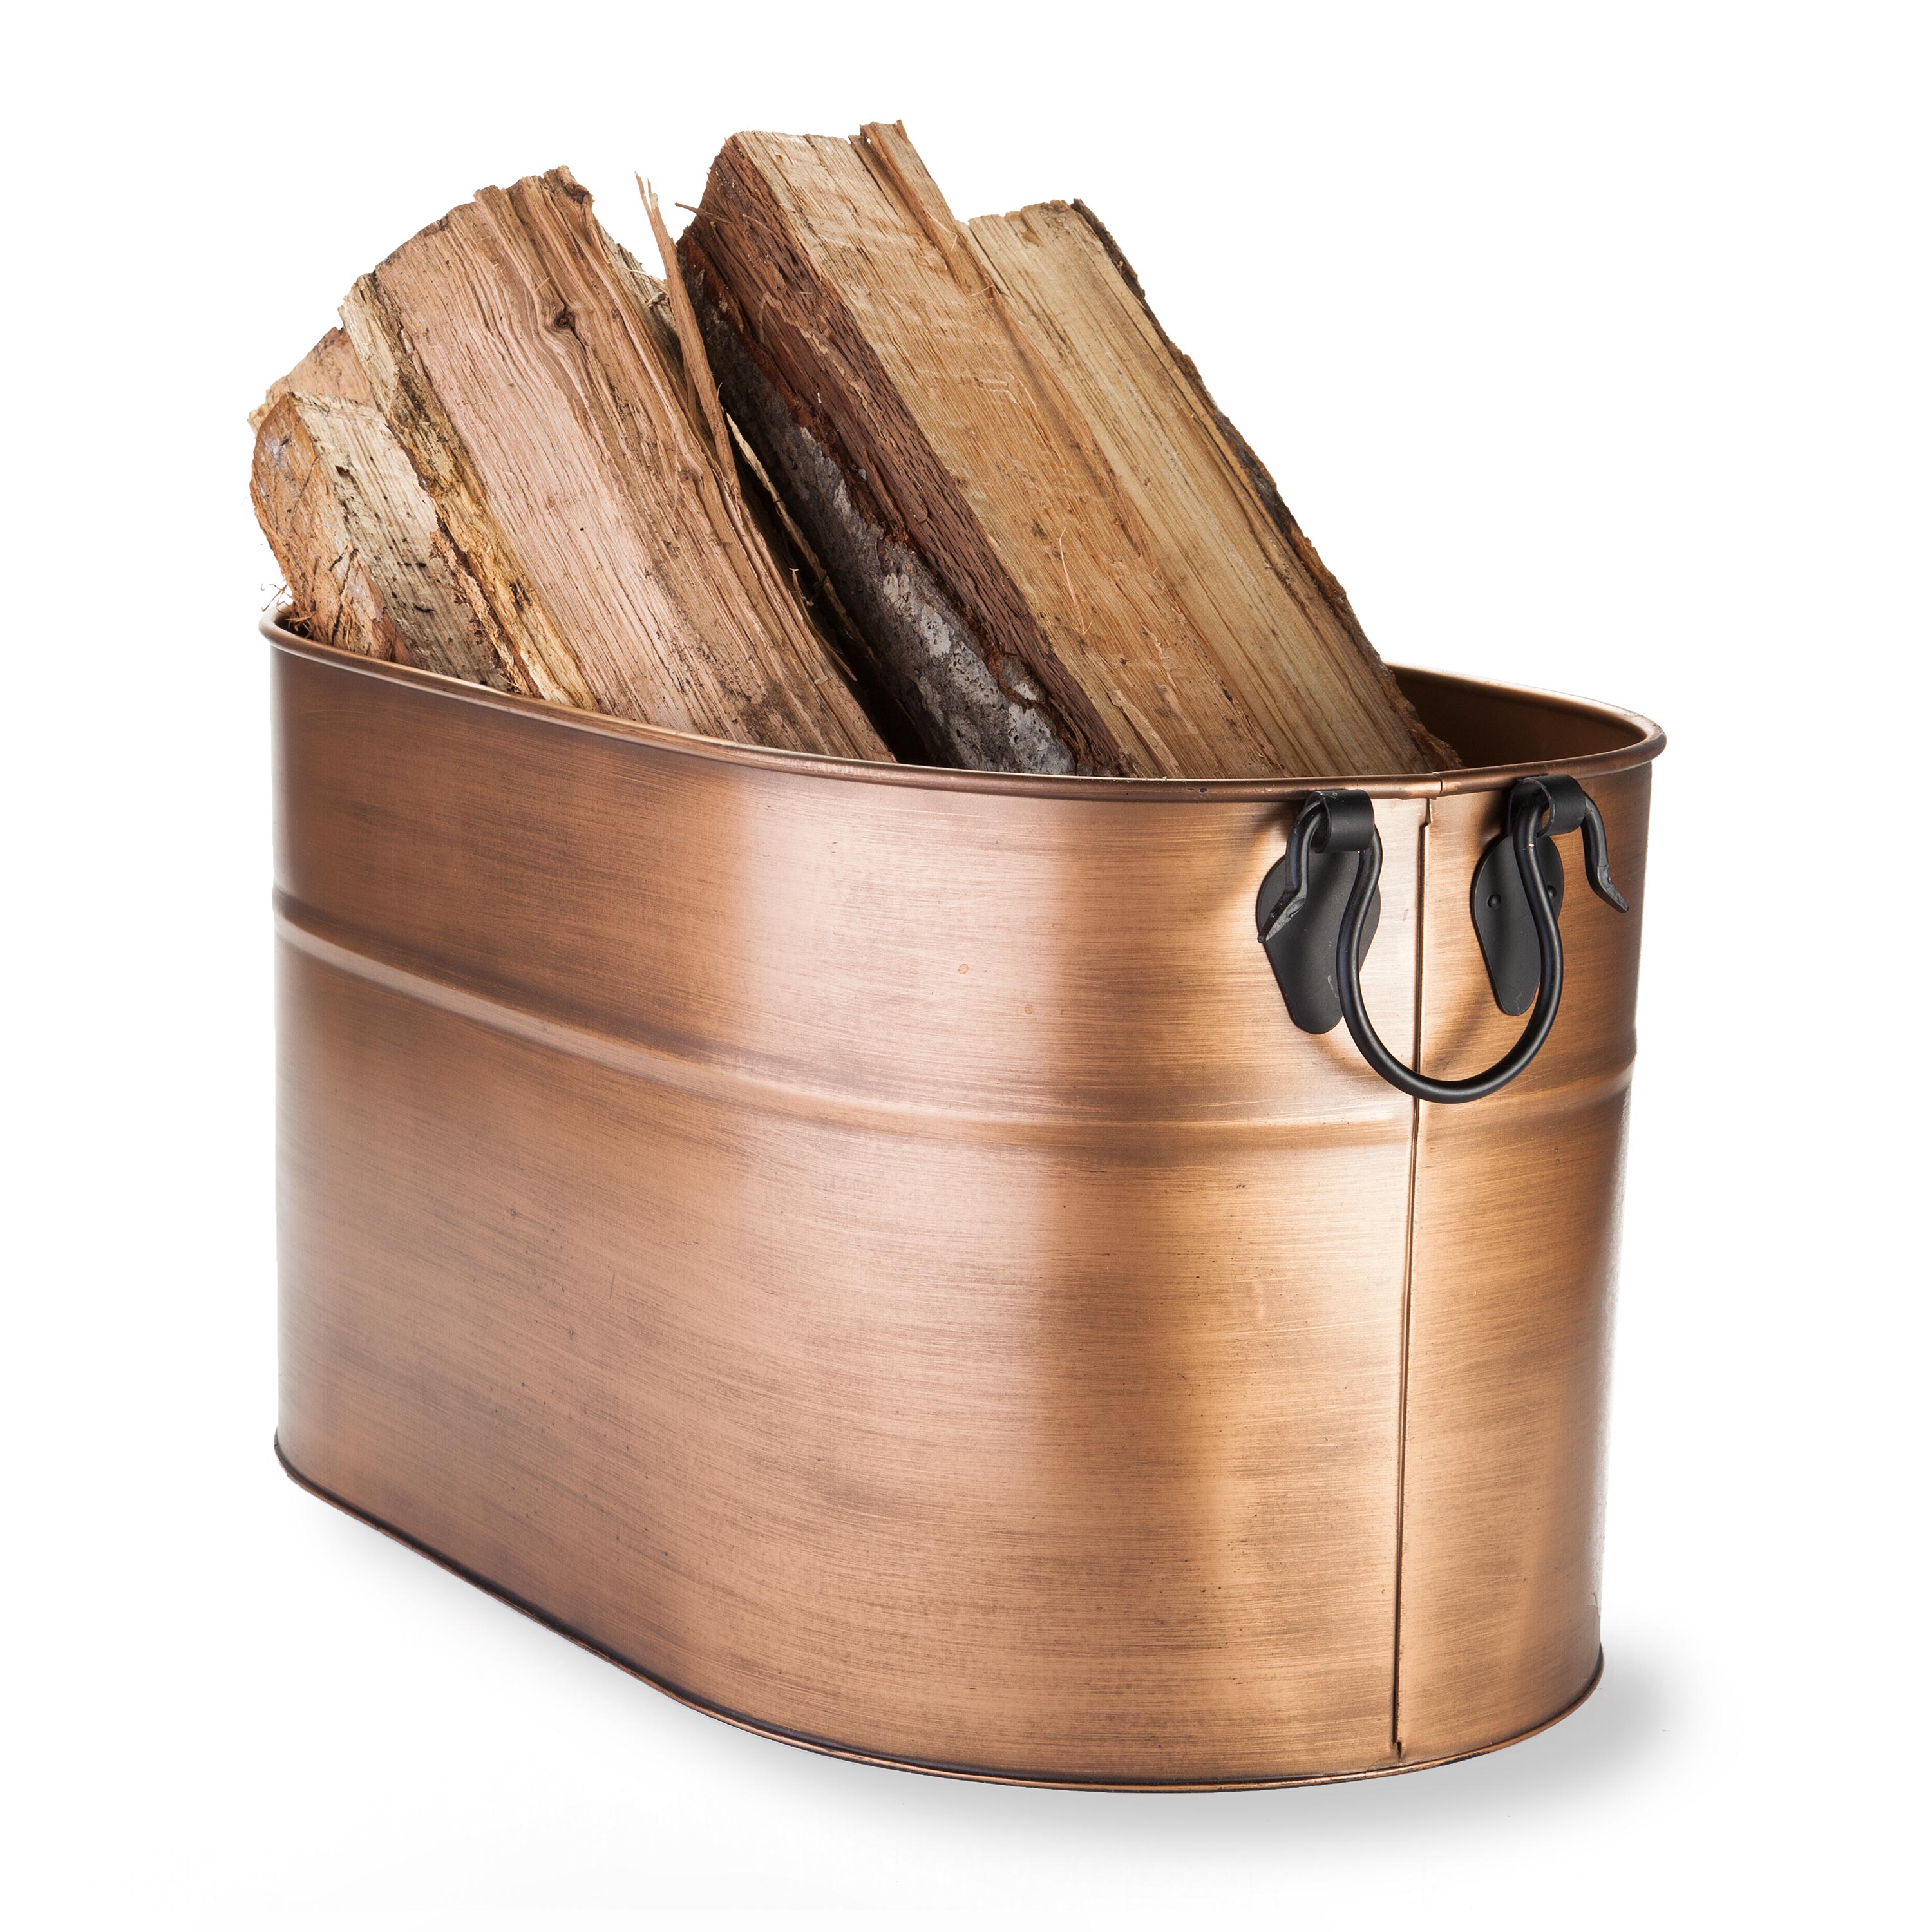 Large Copper-Finish Firewood Bucket